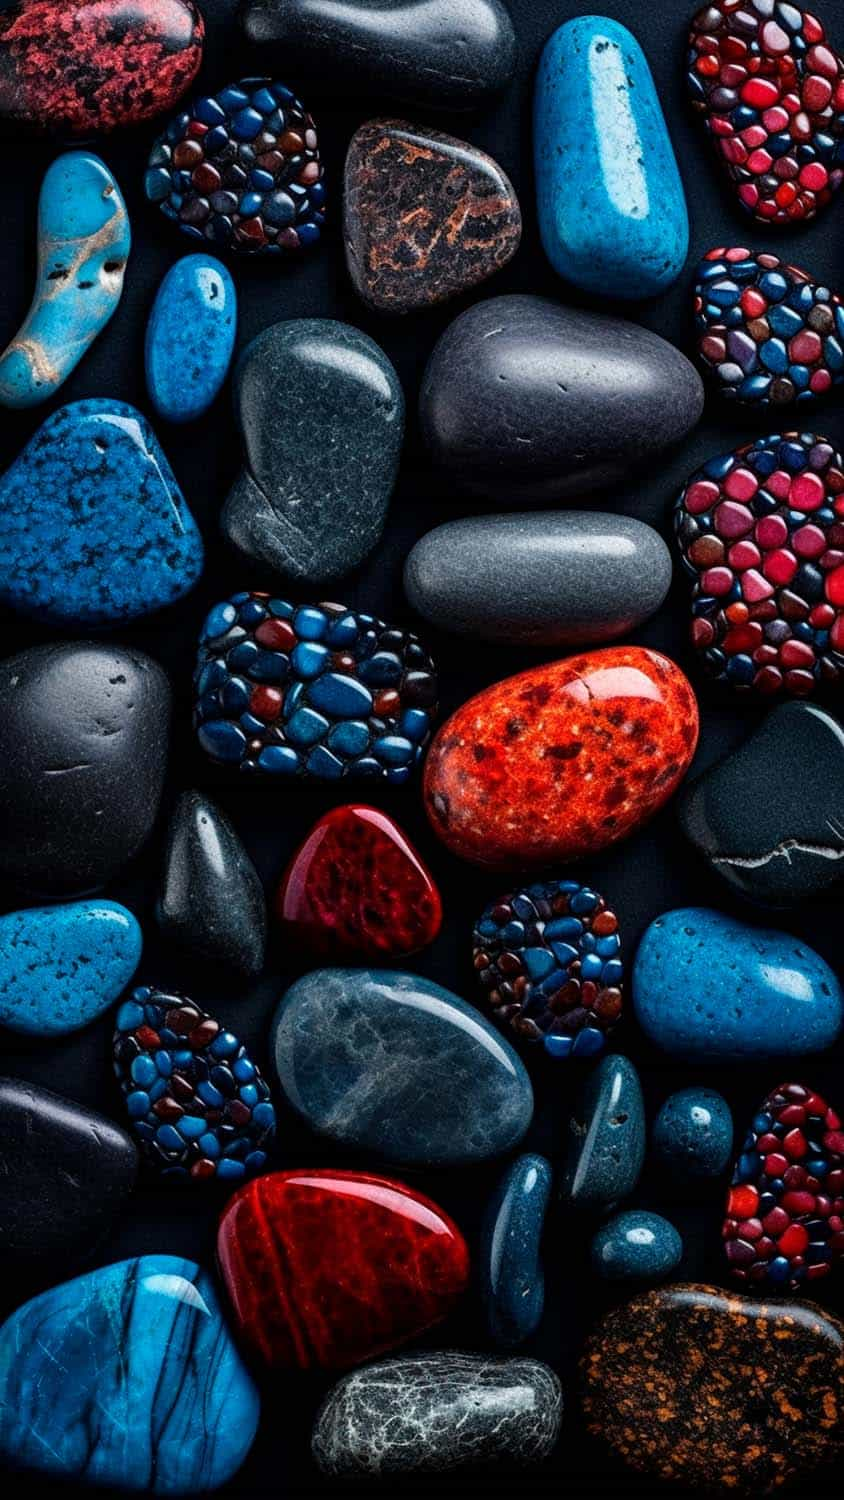 Colorful Pebble Stones iPhone Wallpaper 4K  iPhone Wallpapers